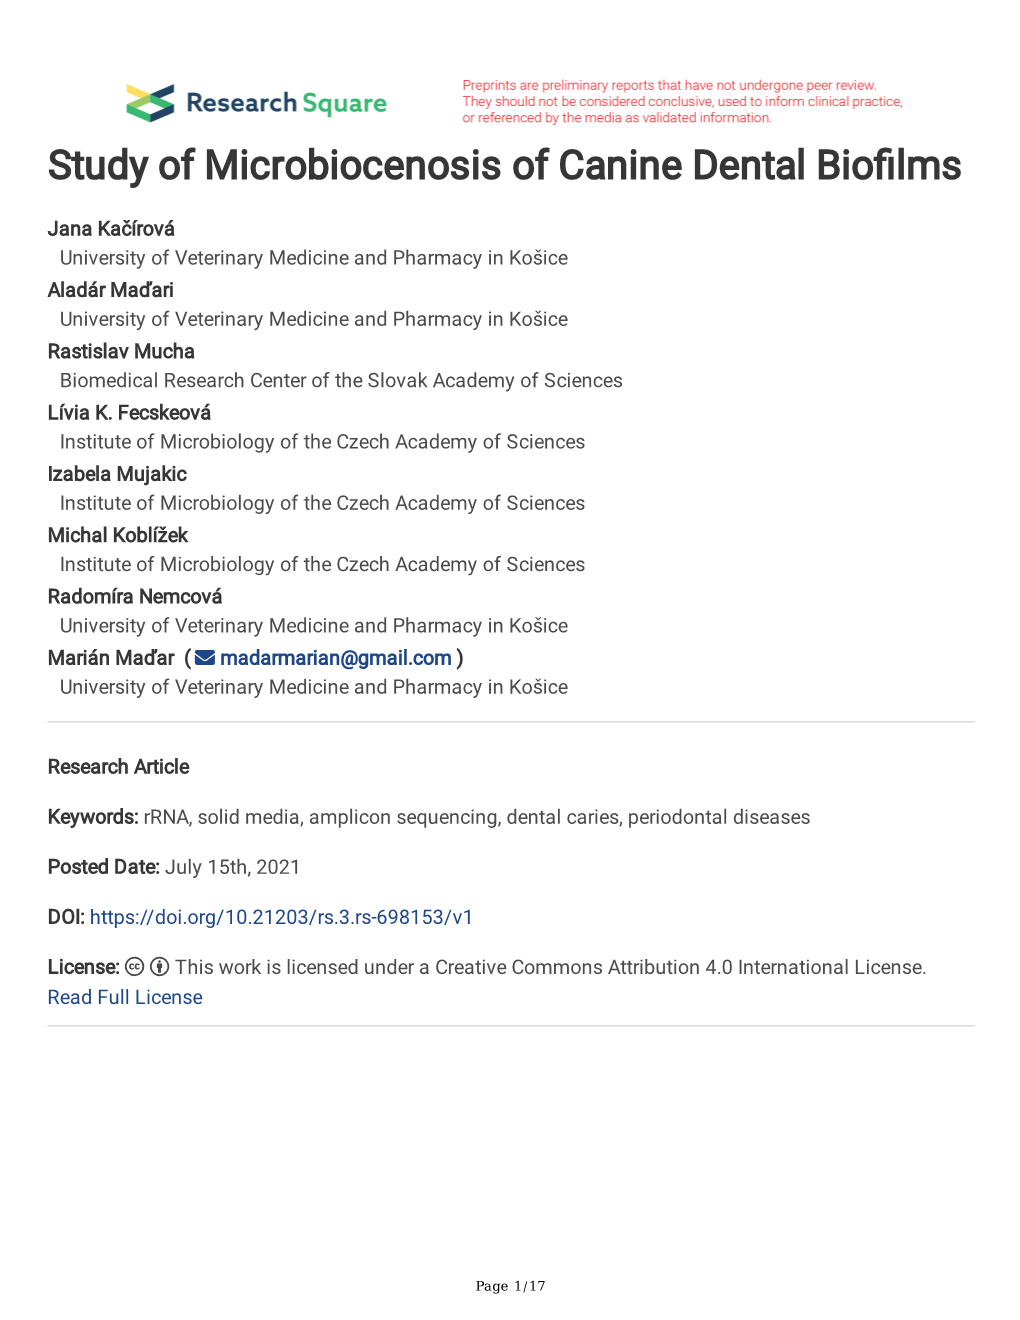 Study of Microbiocenosis of Canine Dental Bioflms